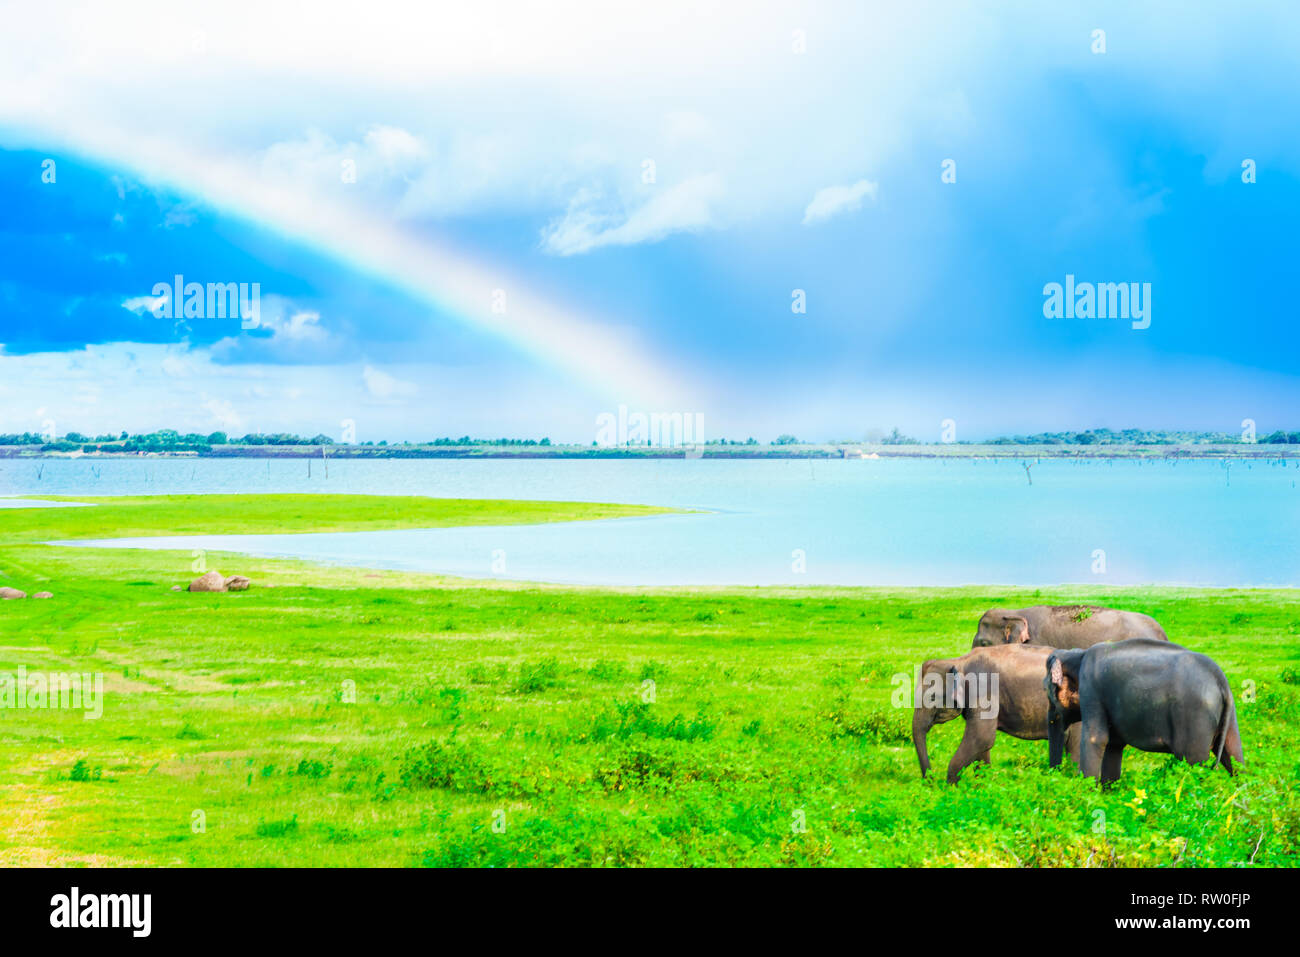 View on elephant in Kaudulla national park, Sri Lanka Stock Photo